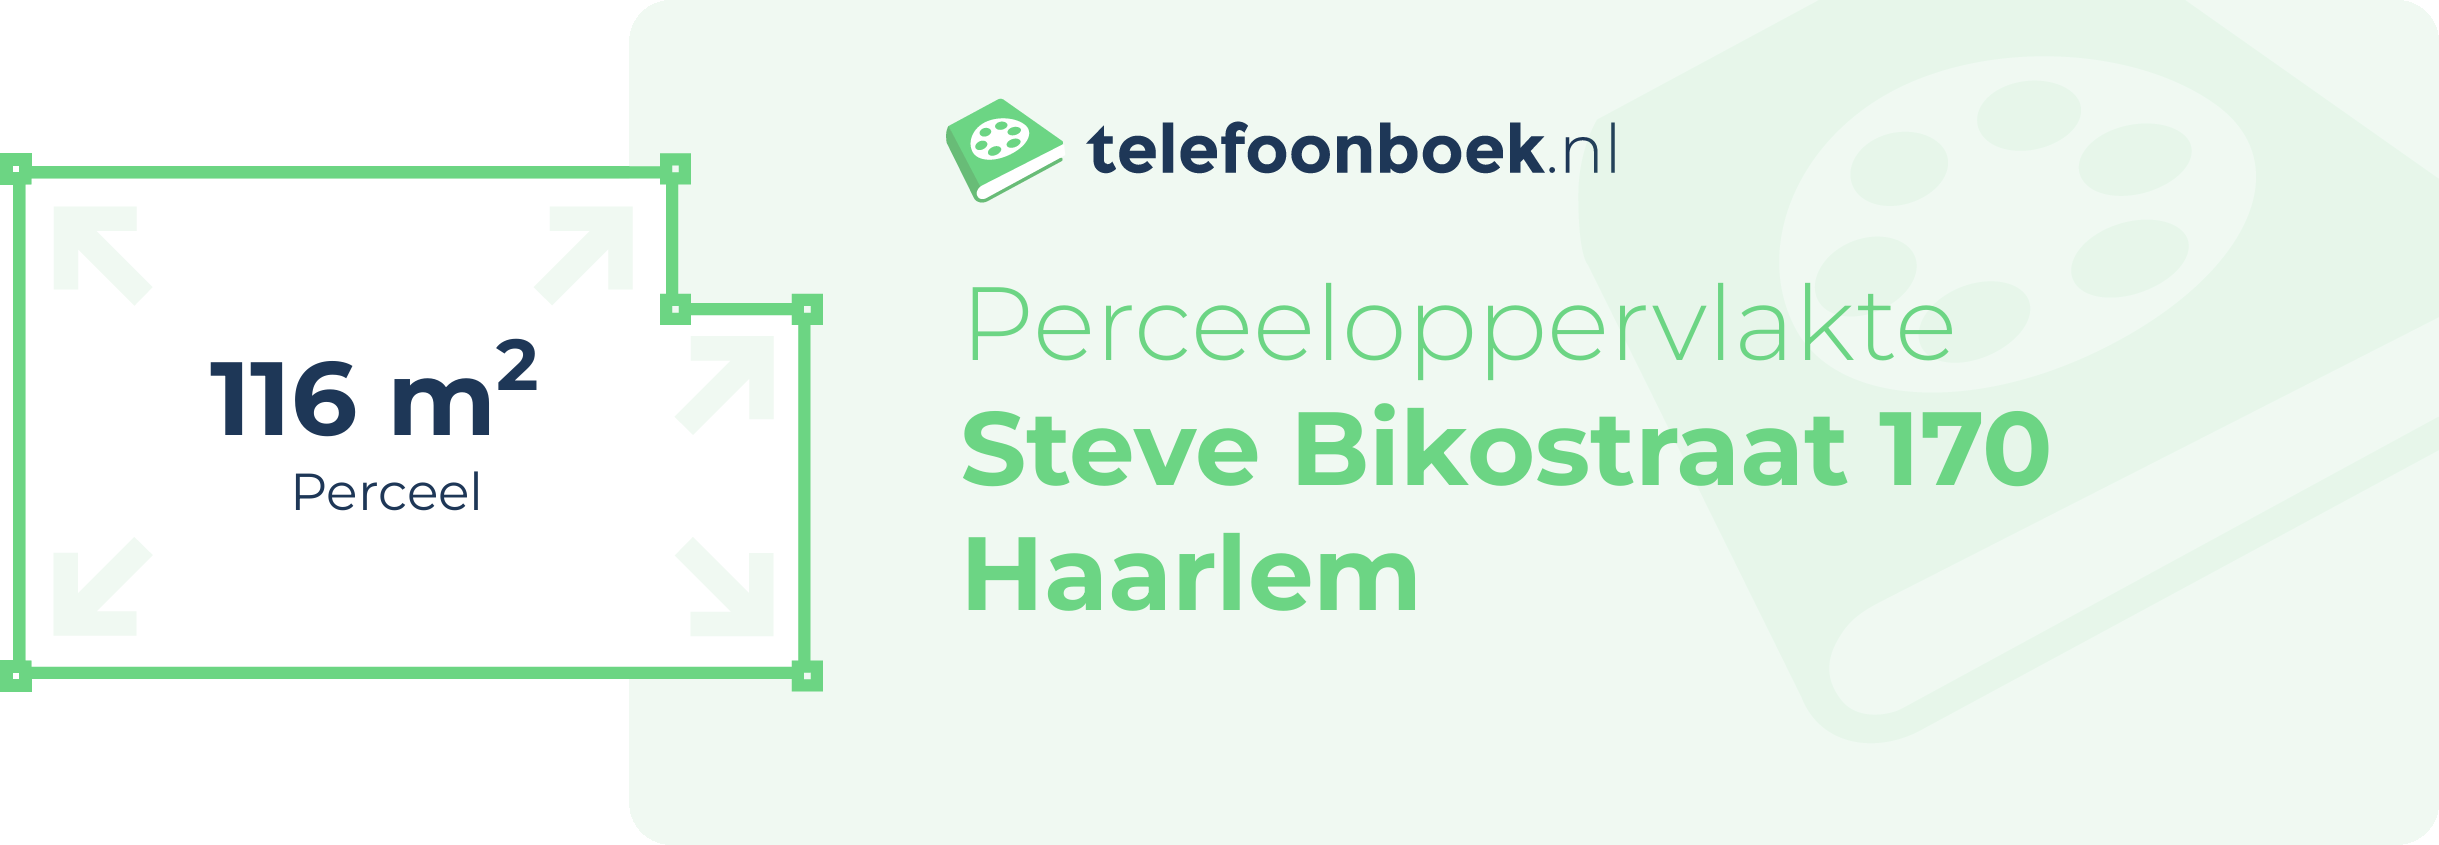 Perceeloppervlakte Steve Bikostraat 170 Haarlem